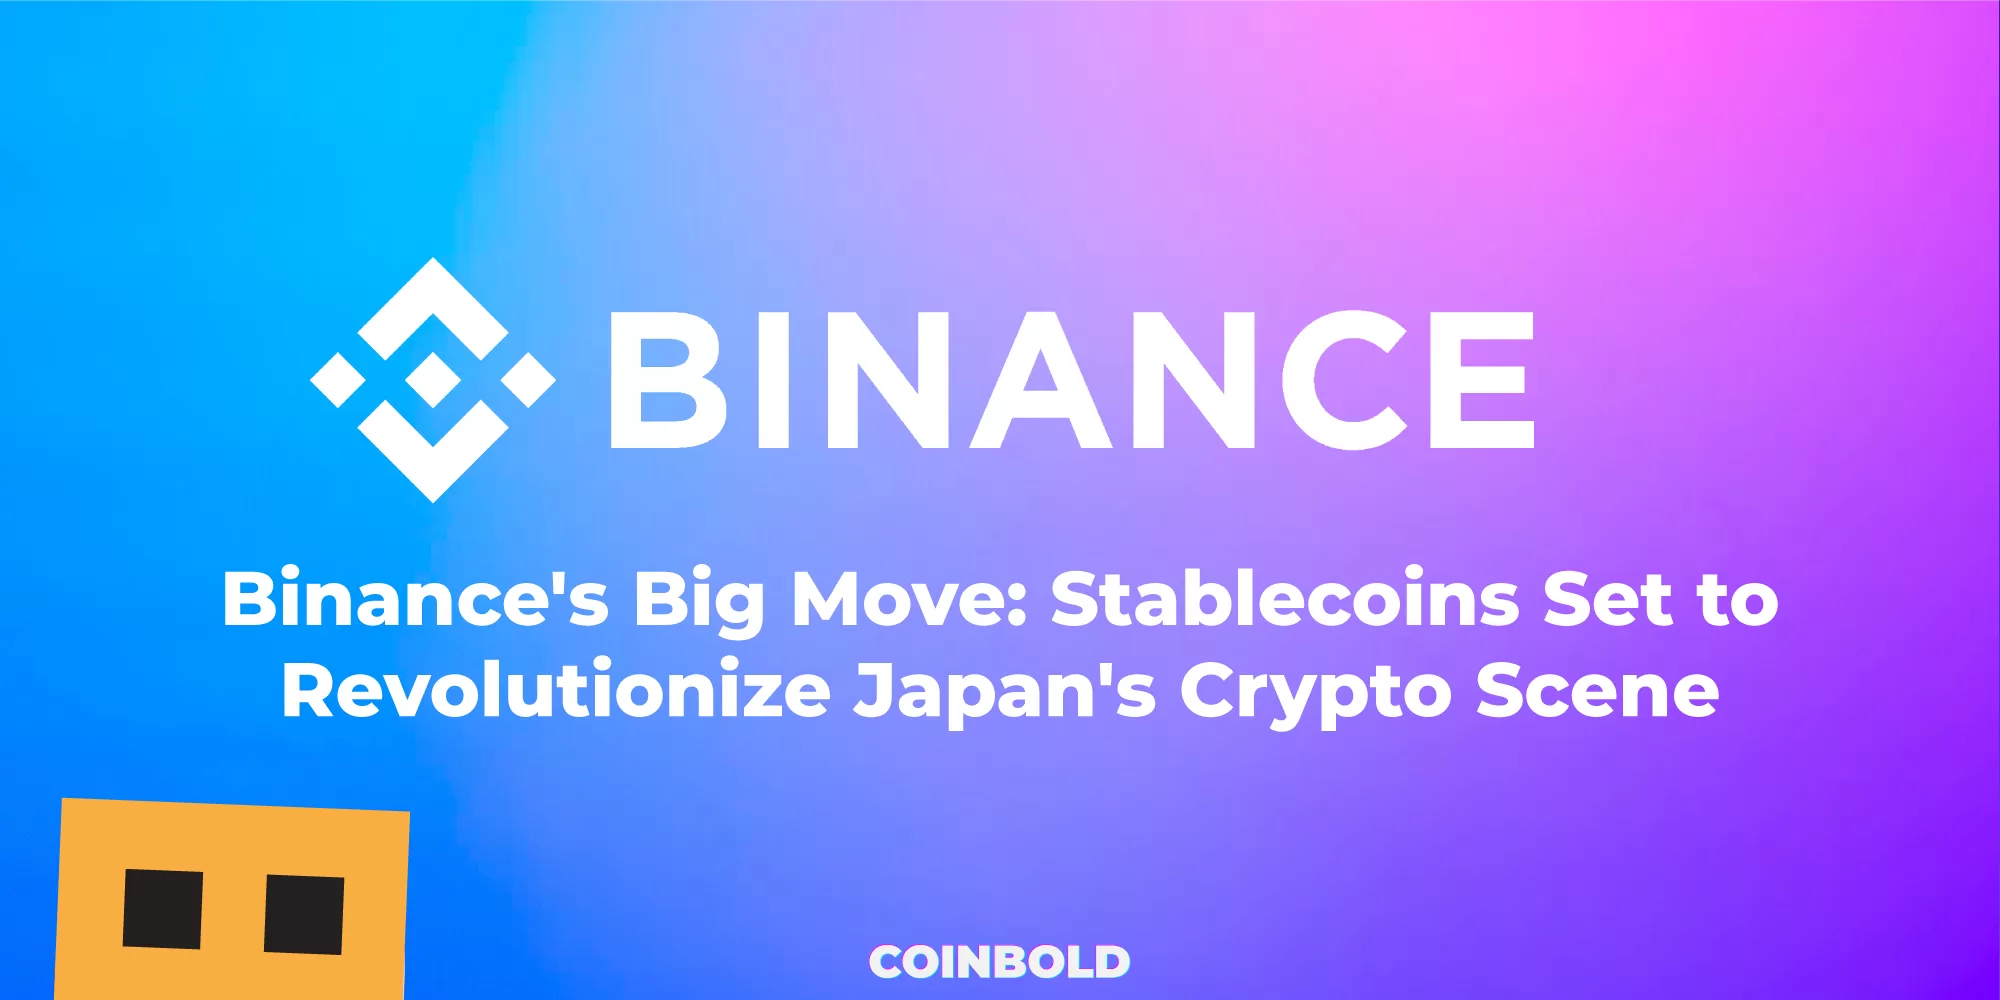 Binance's Big Move Stablecoins Set to Revolutionize Japan's Crypto Scene